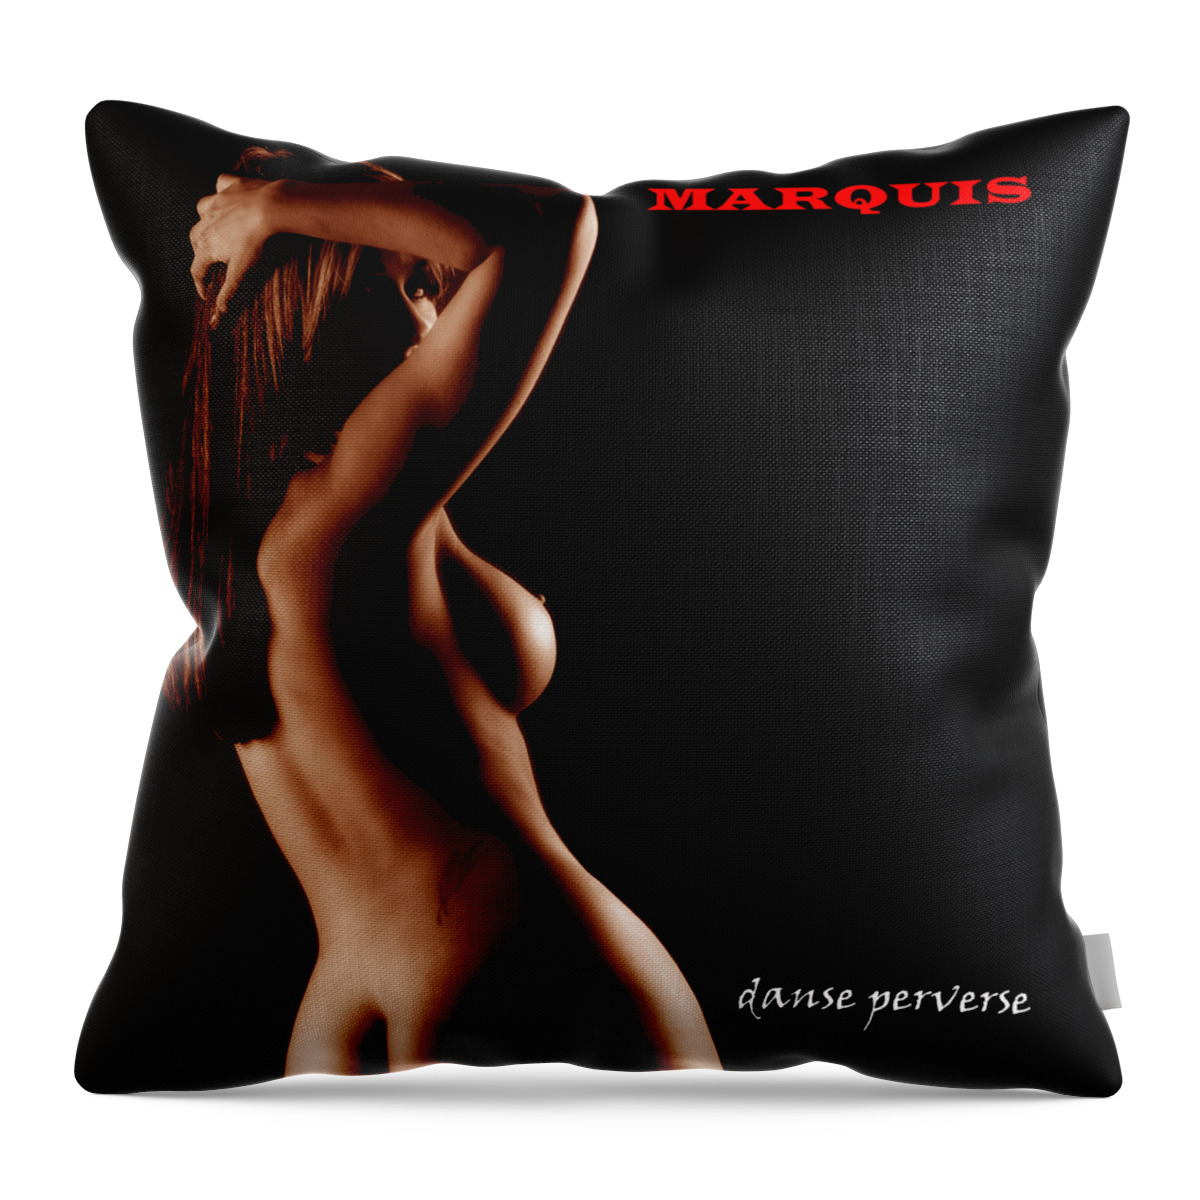 Music Throw Pillow featuring the digital art Marquis - Danse Perverse by Mark Baranowski